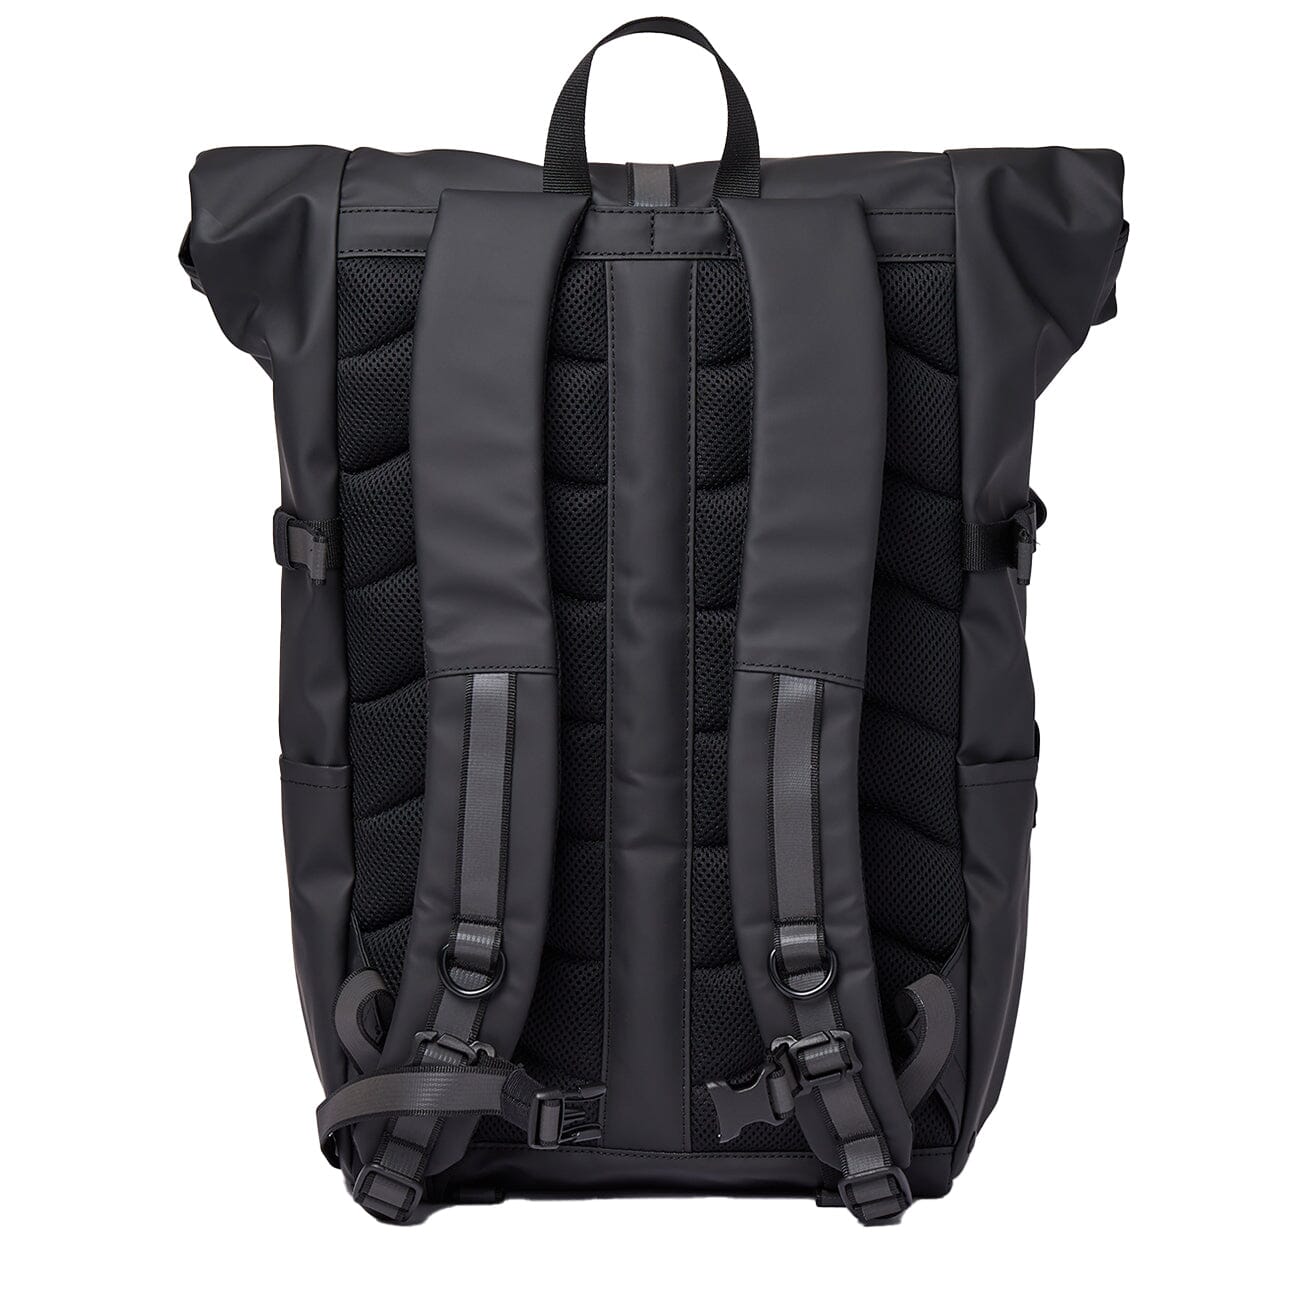 waterproof commuter backpack ruben 2 sandqvist black color back view